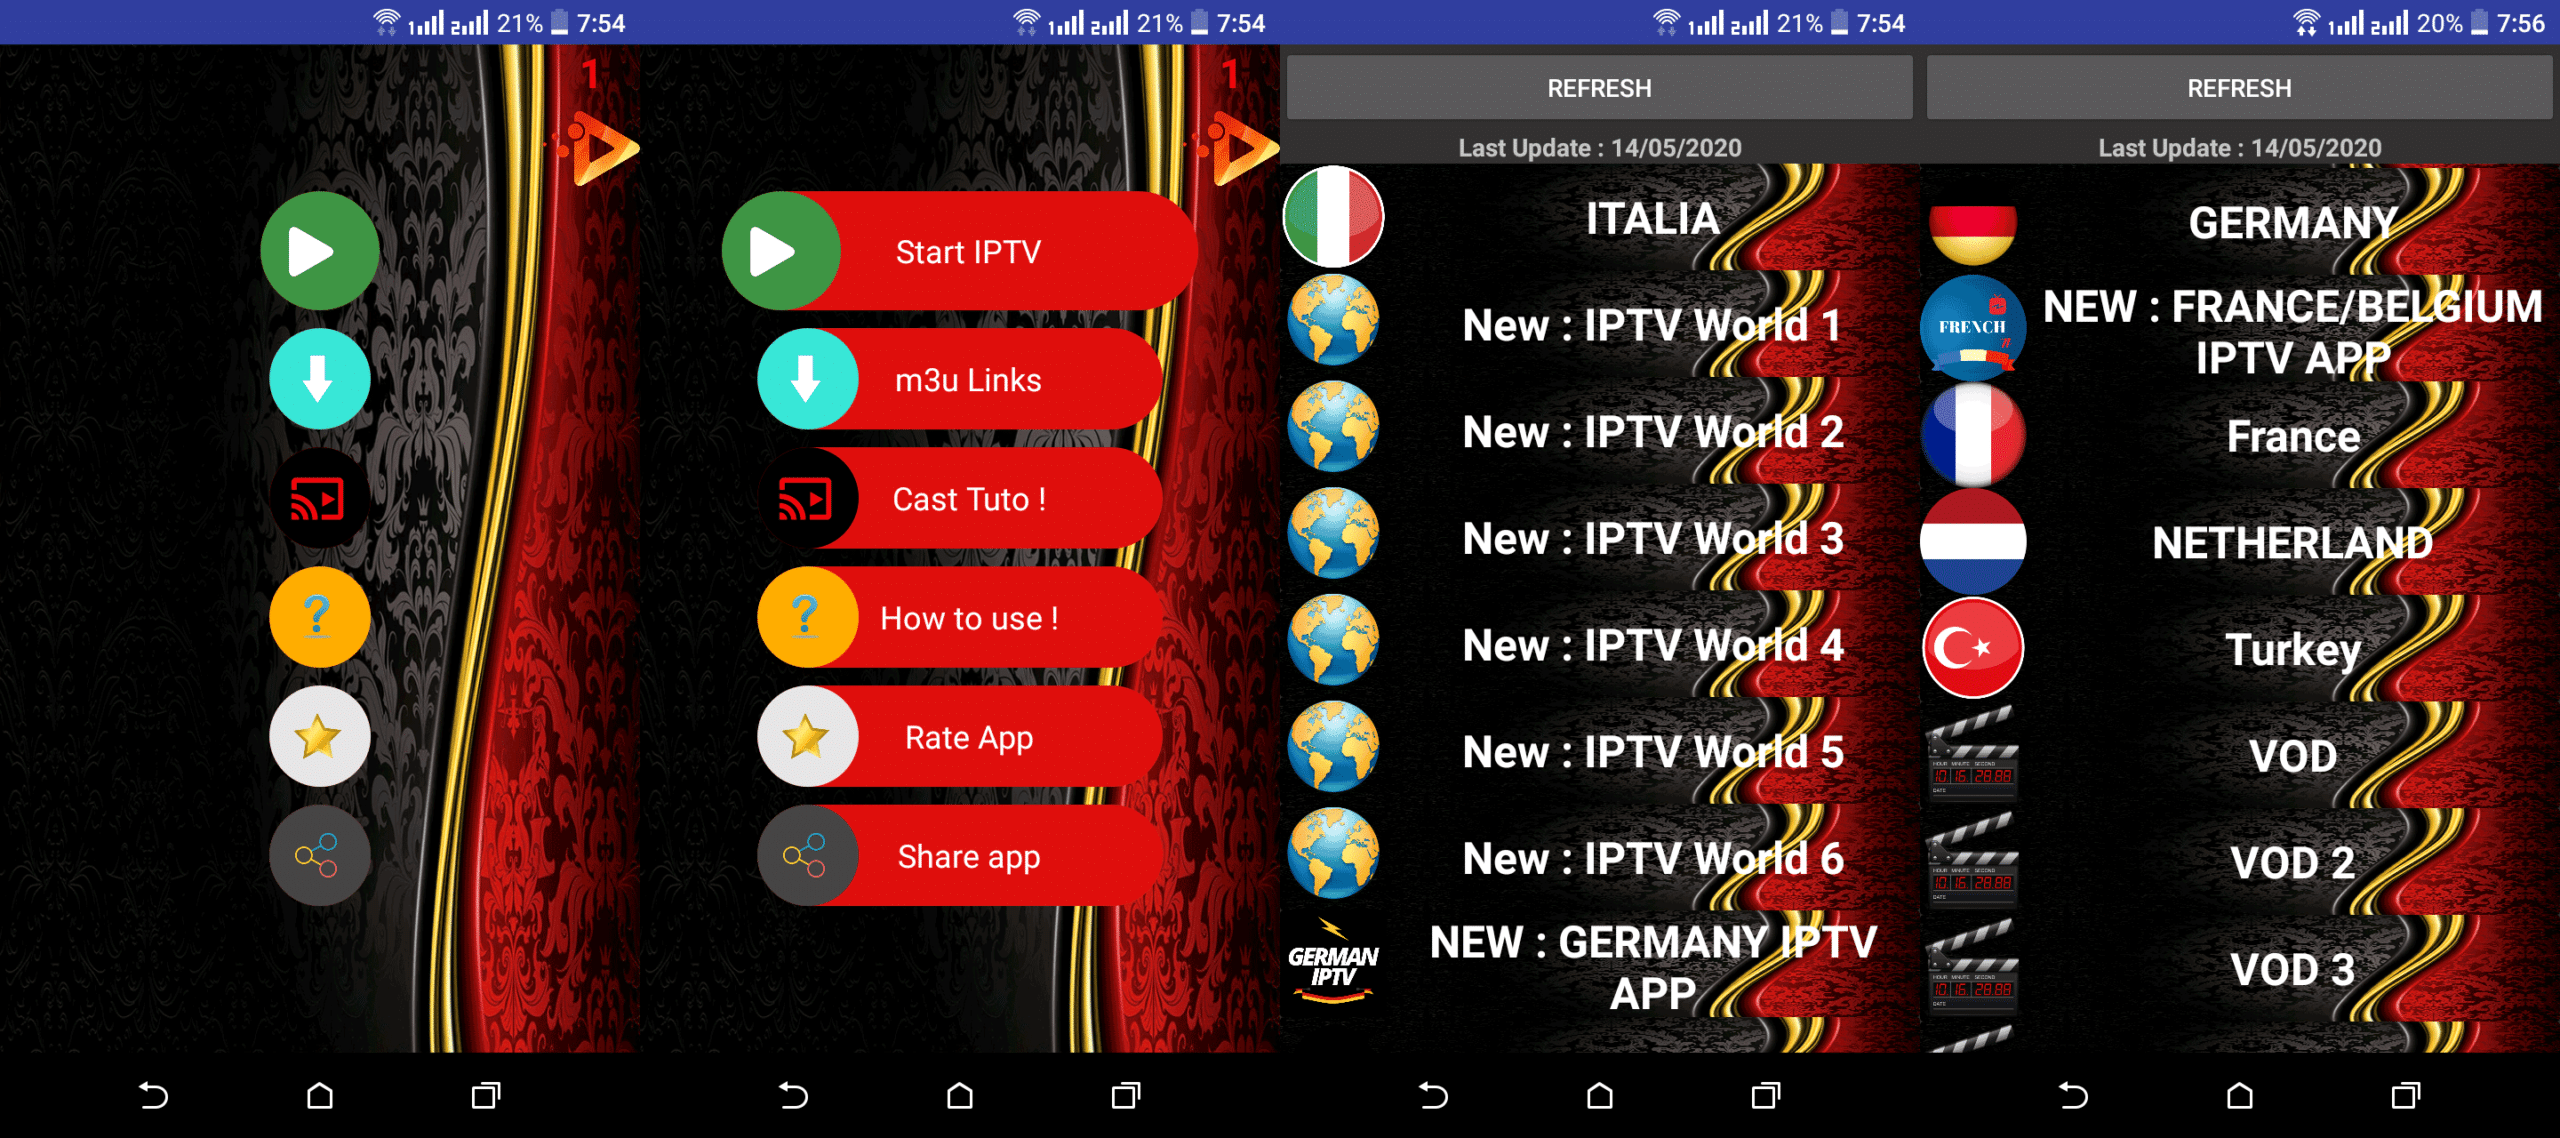 D4PTV_v15 APK [Latest] Android 2020 2